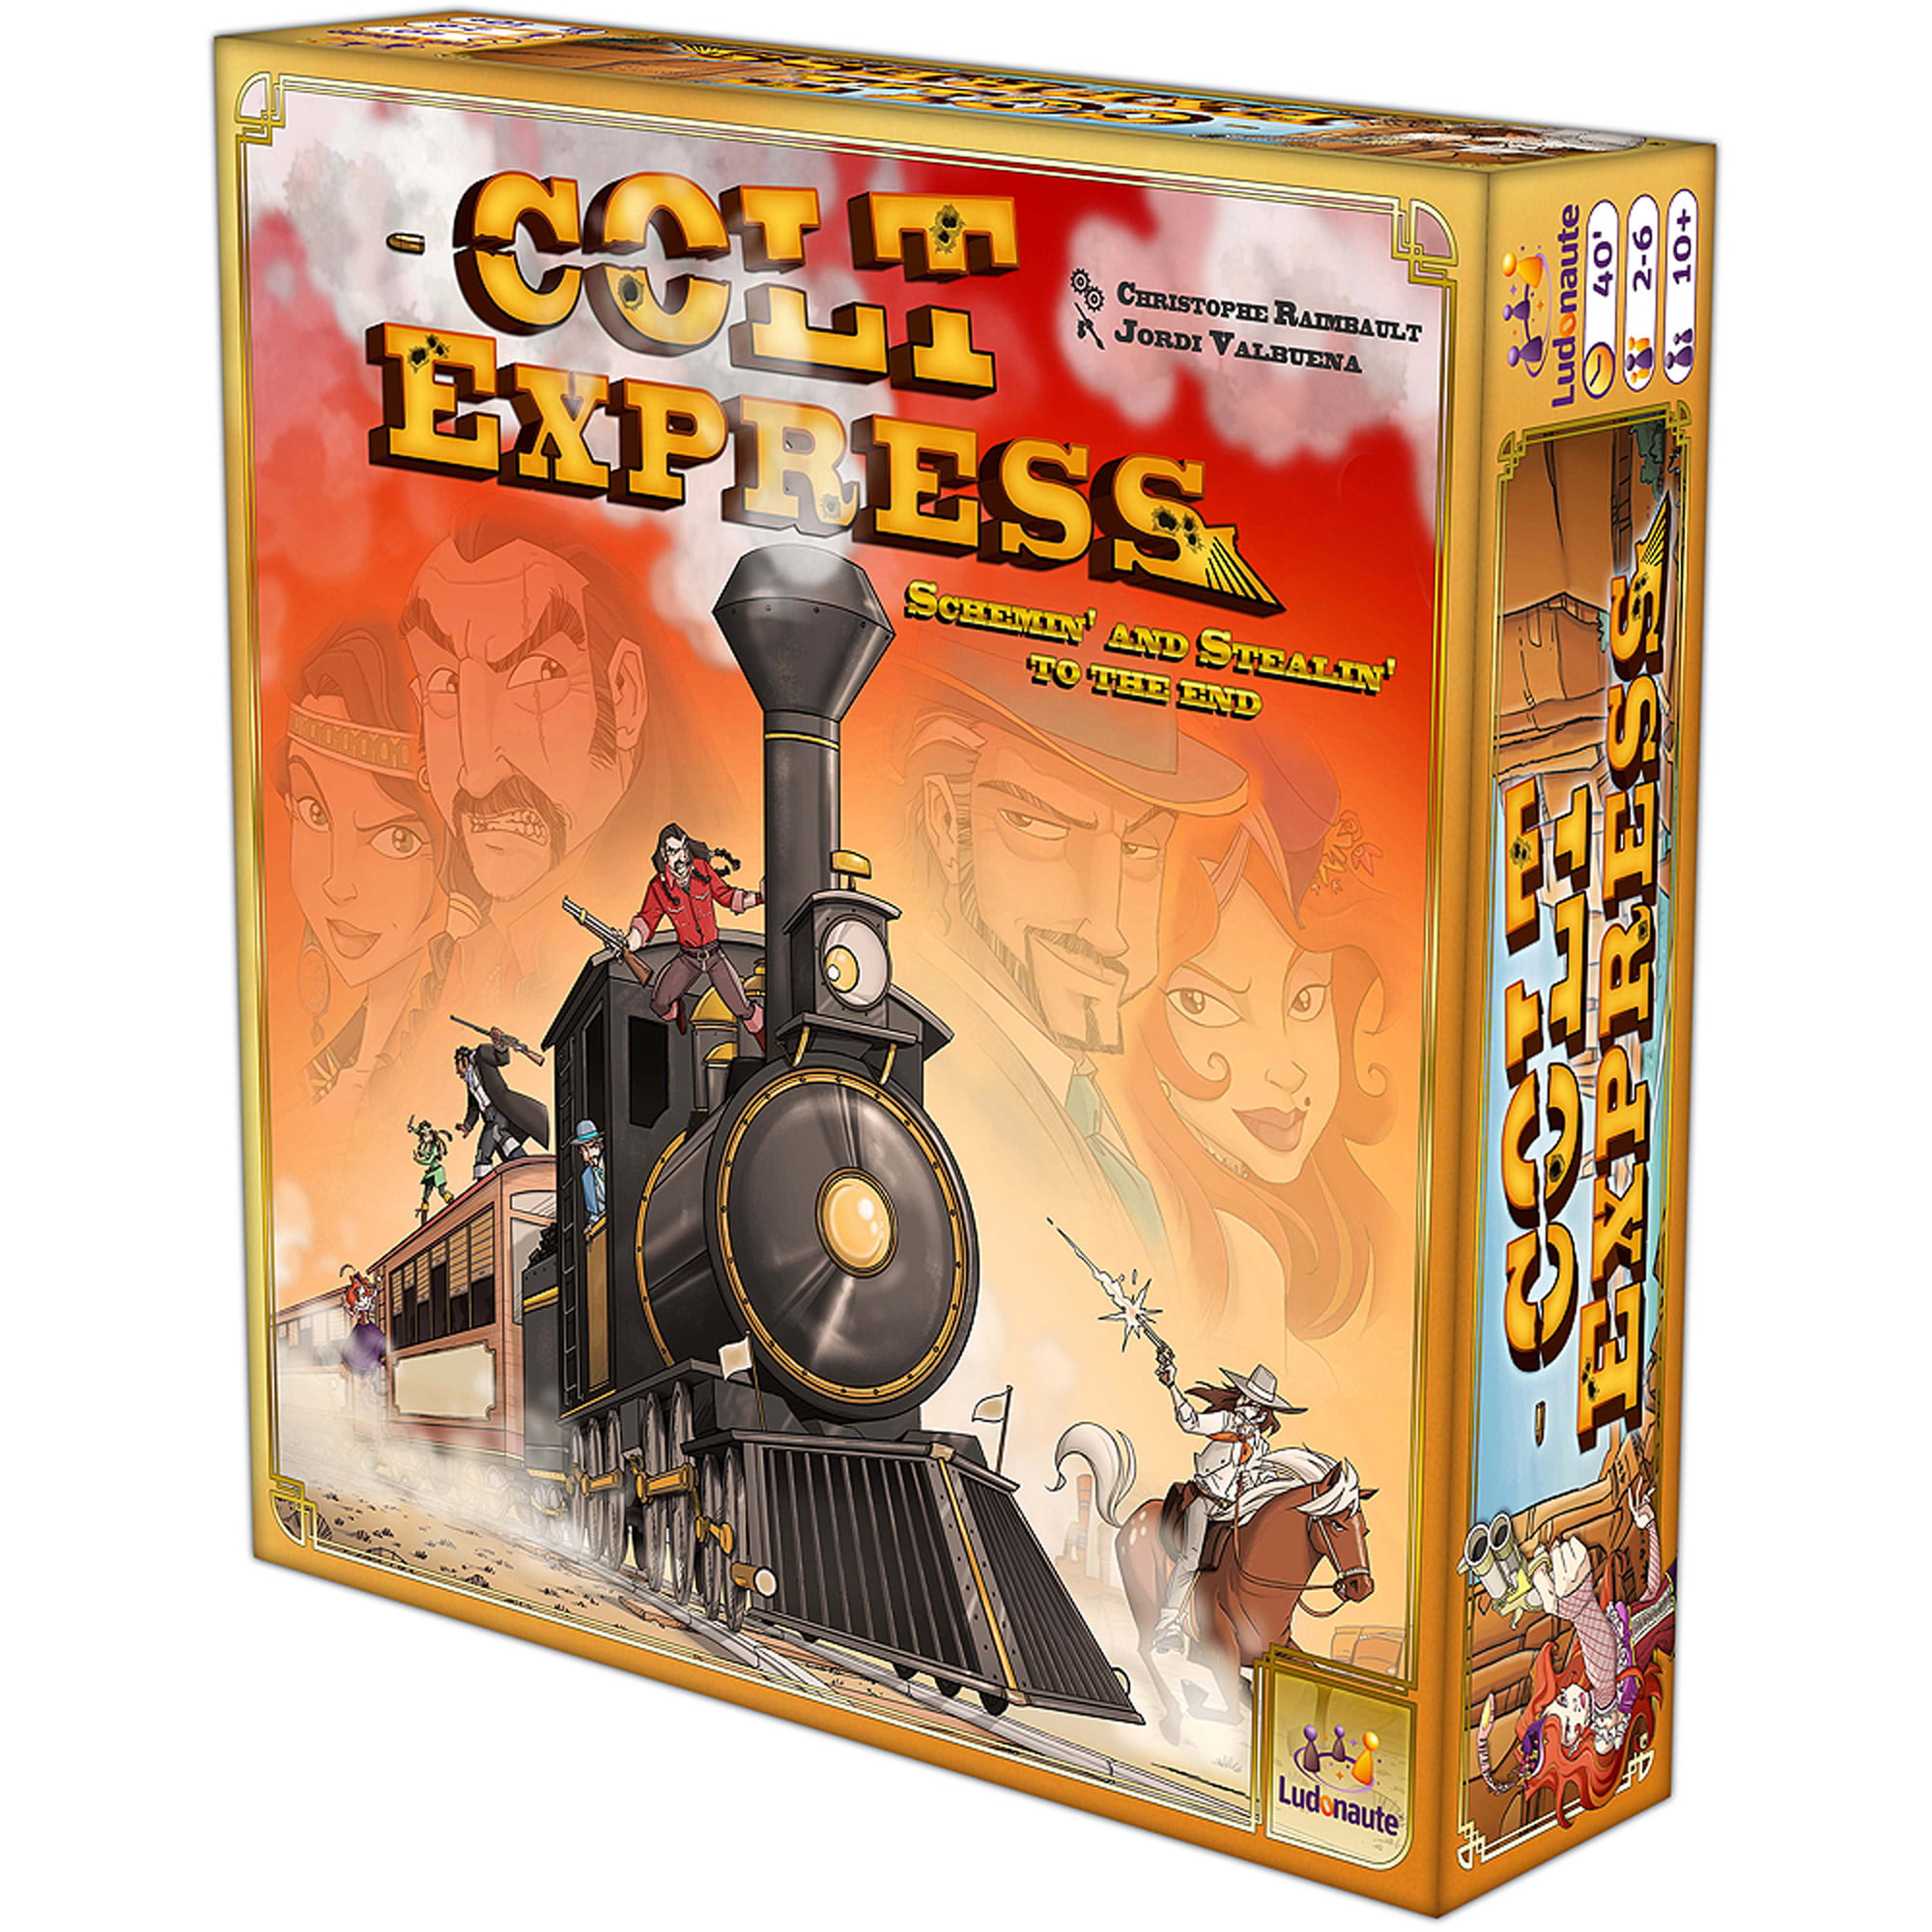 Colt express steam фото 82